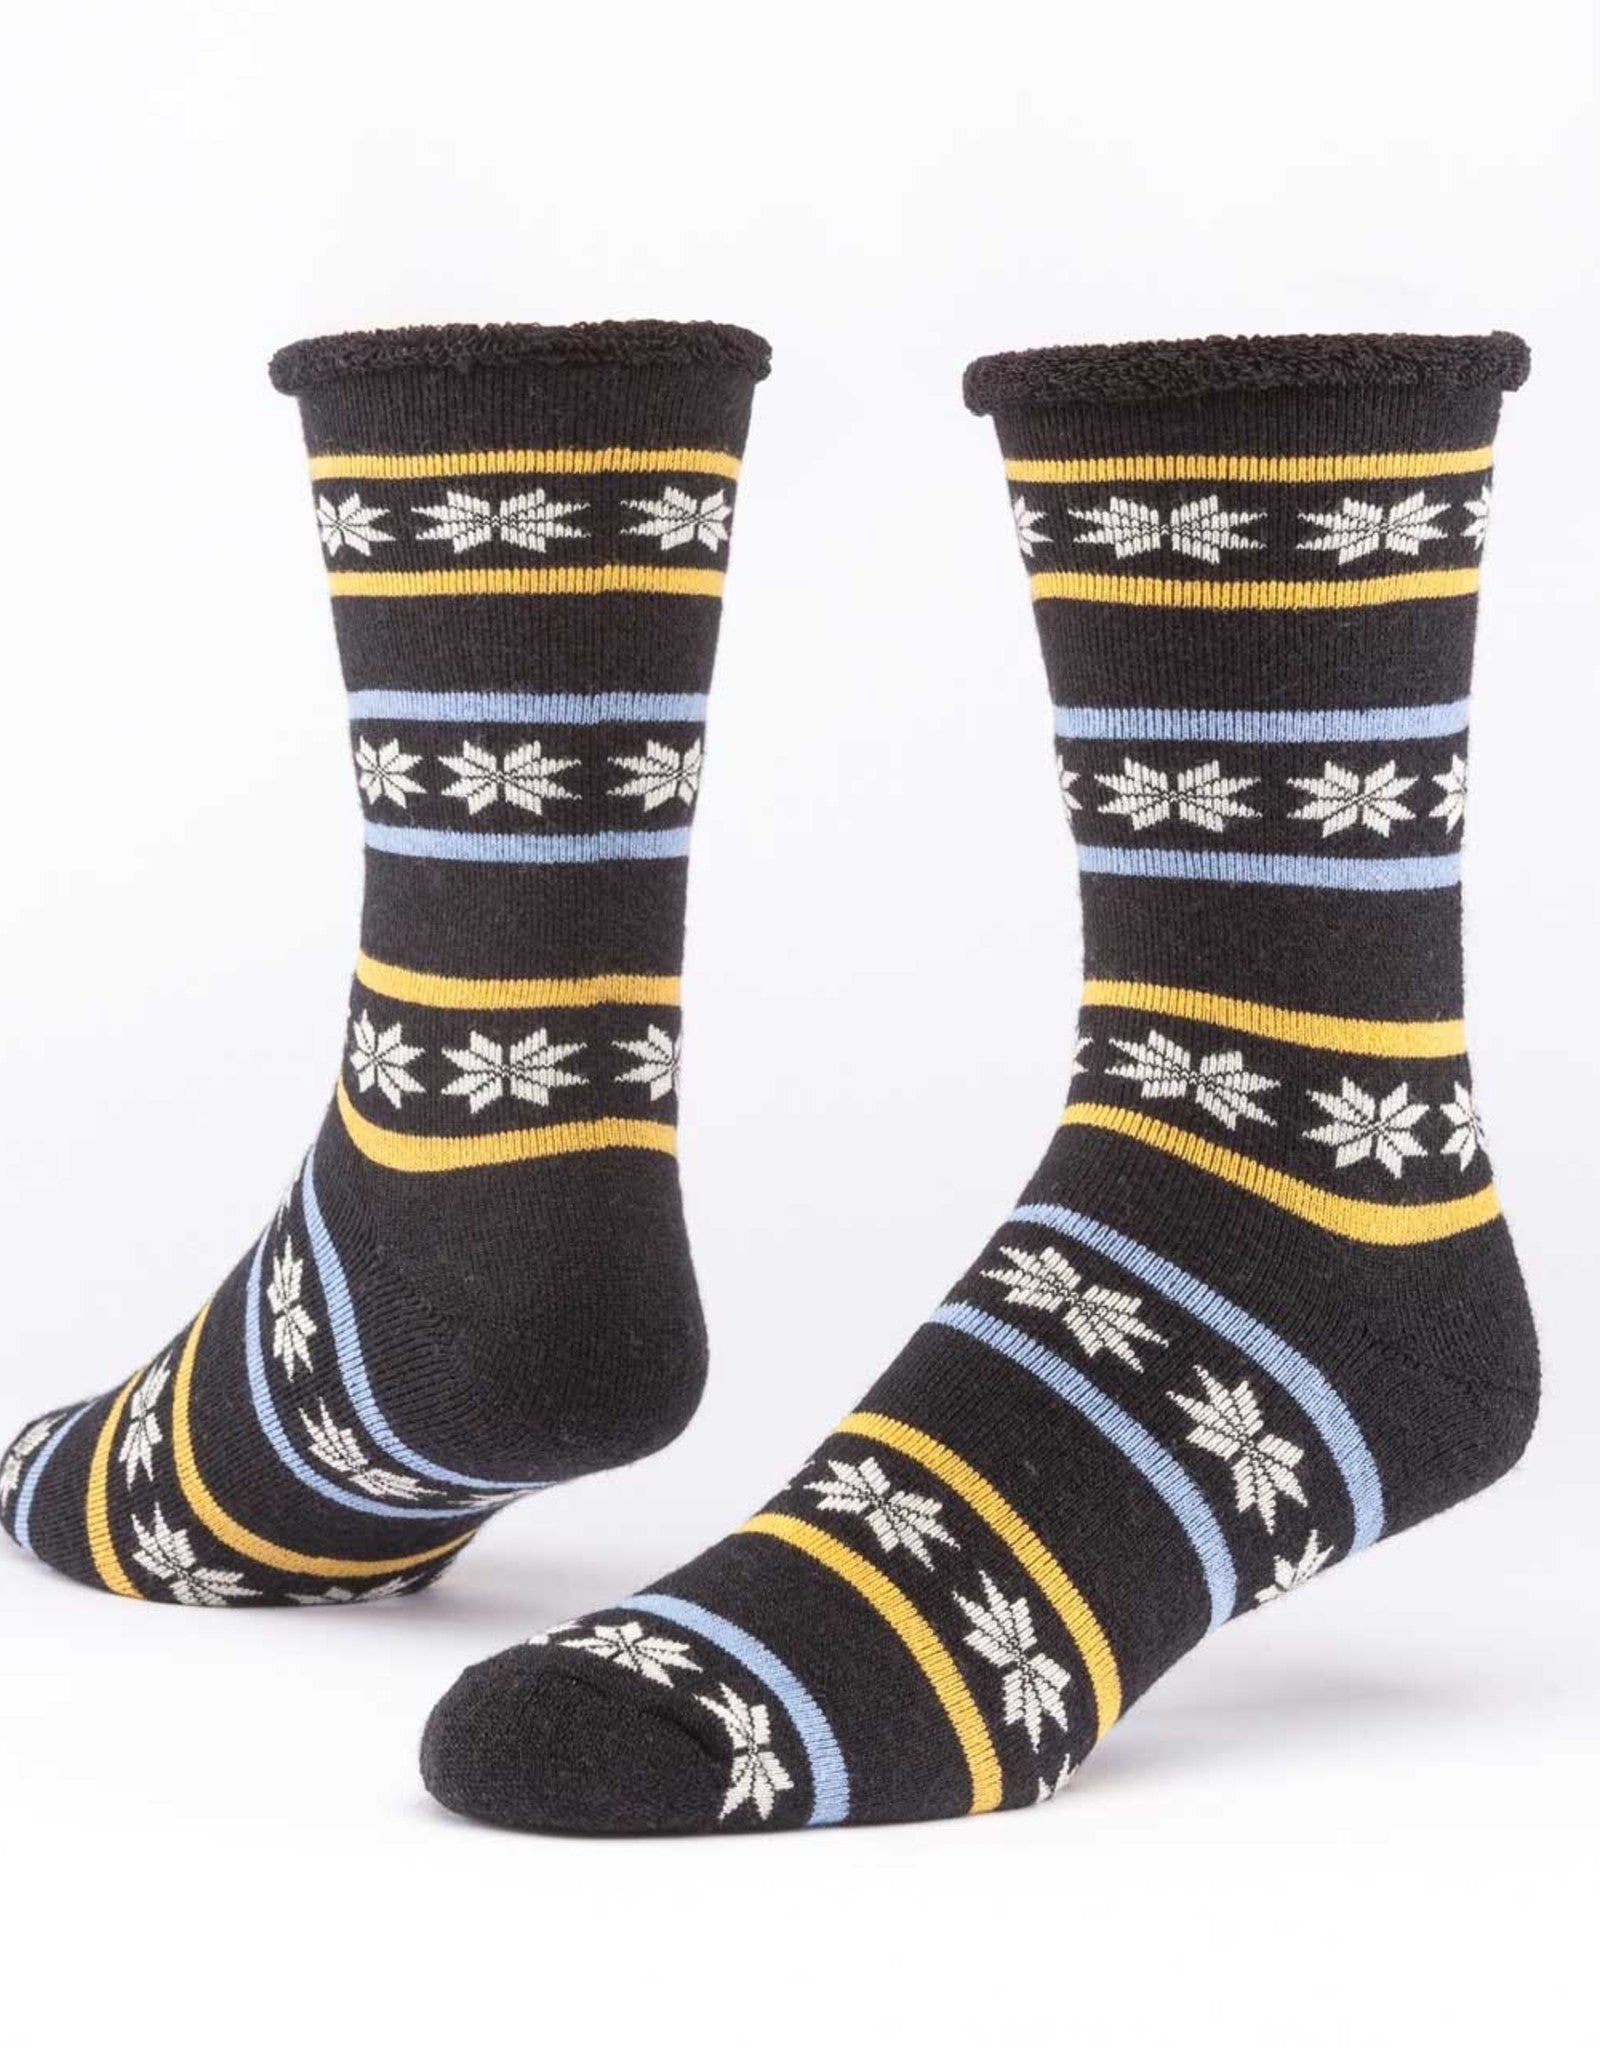 Wool Snuggle Socks - Poinsettia Black